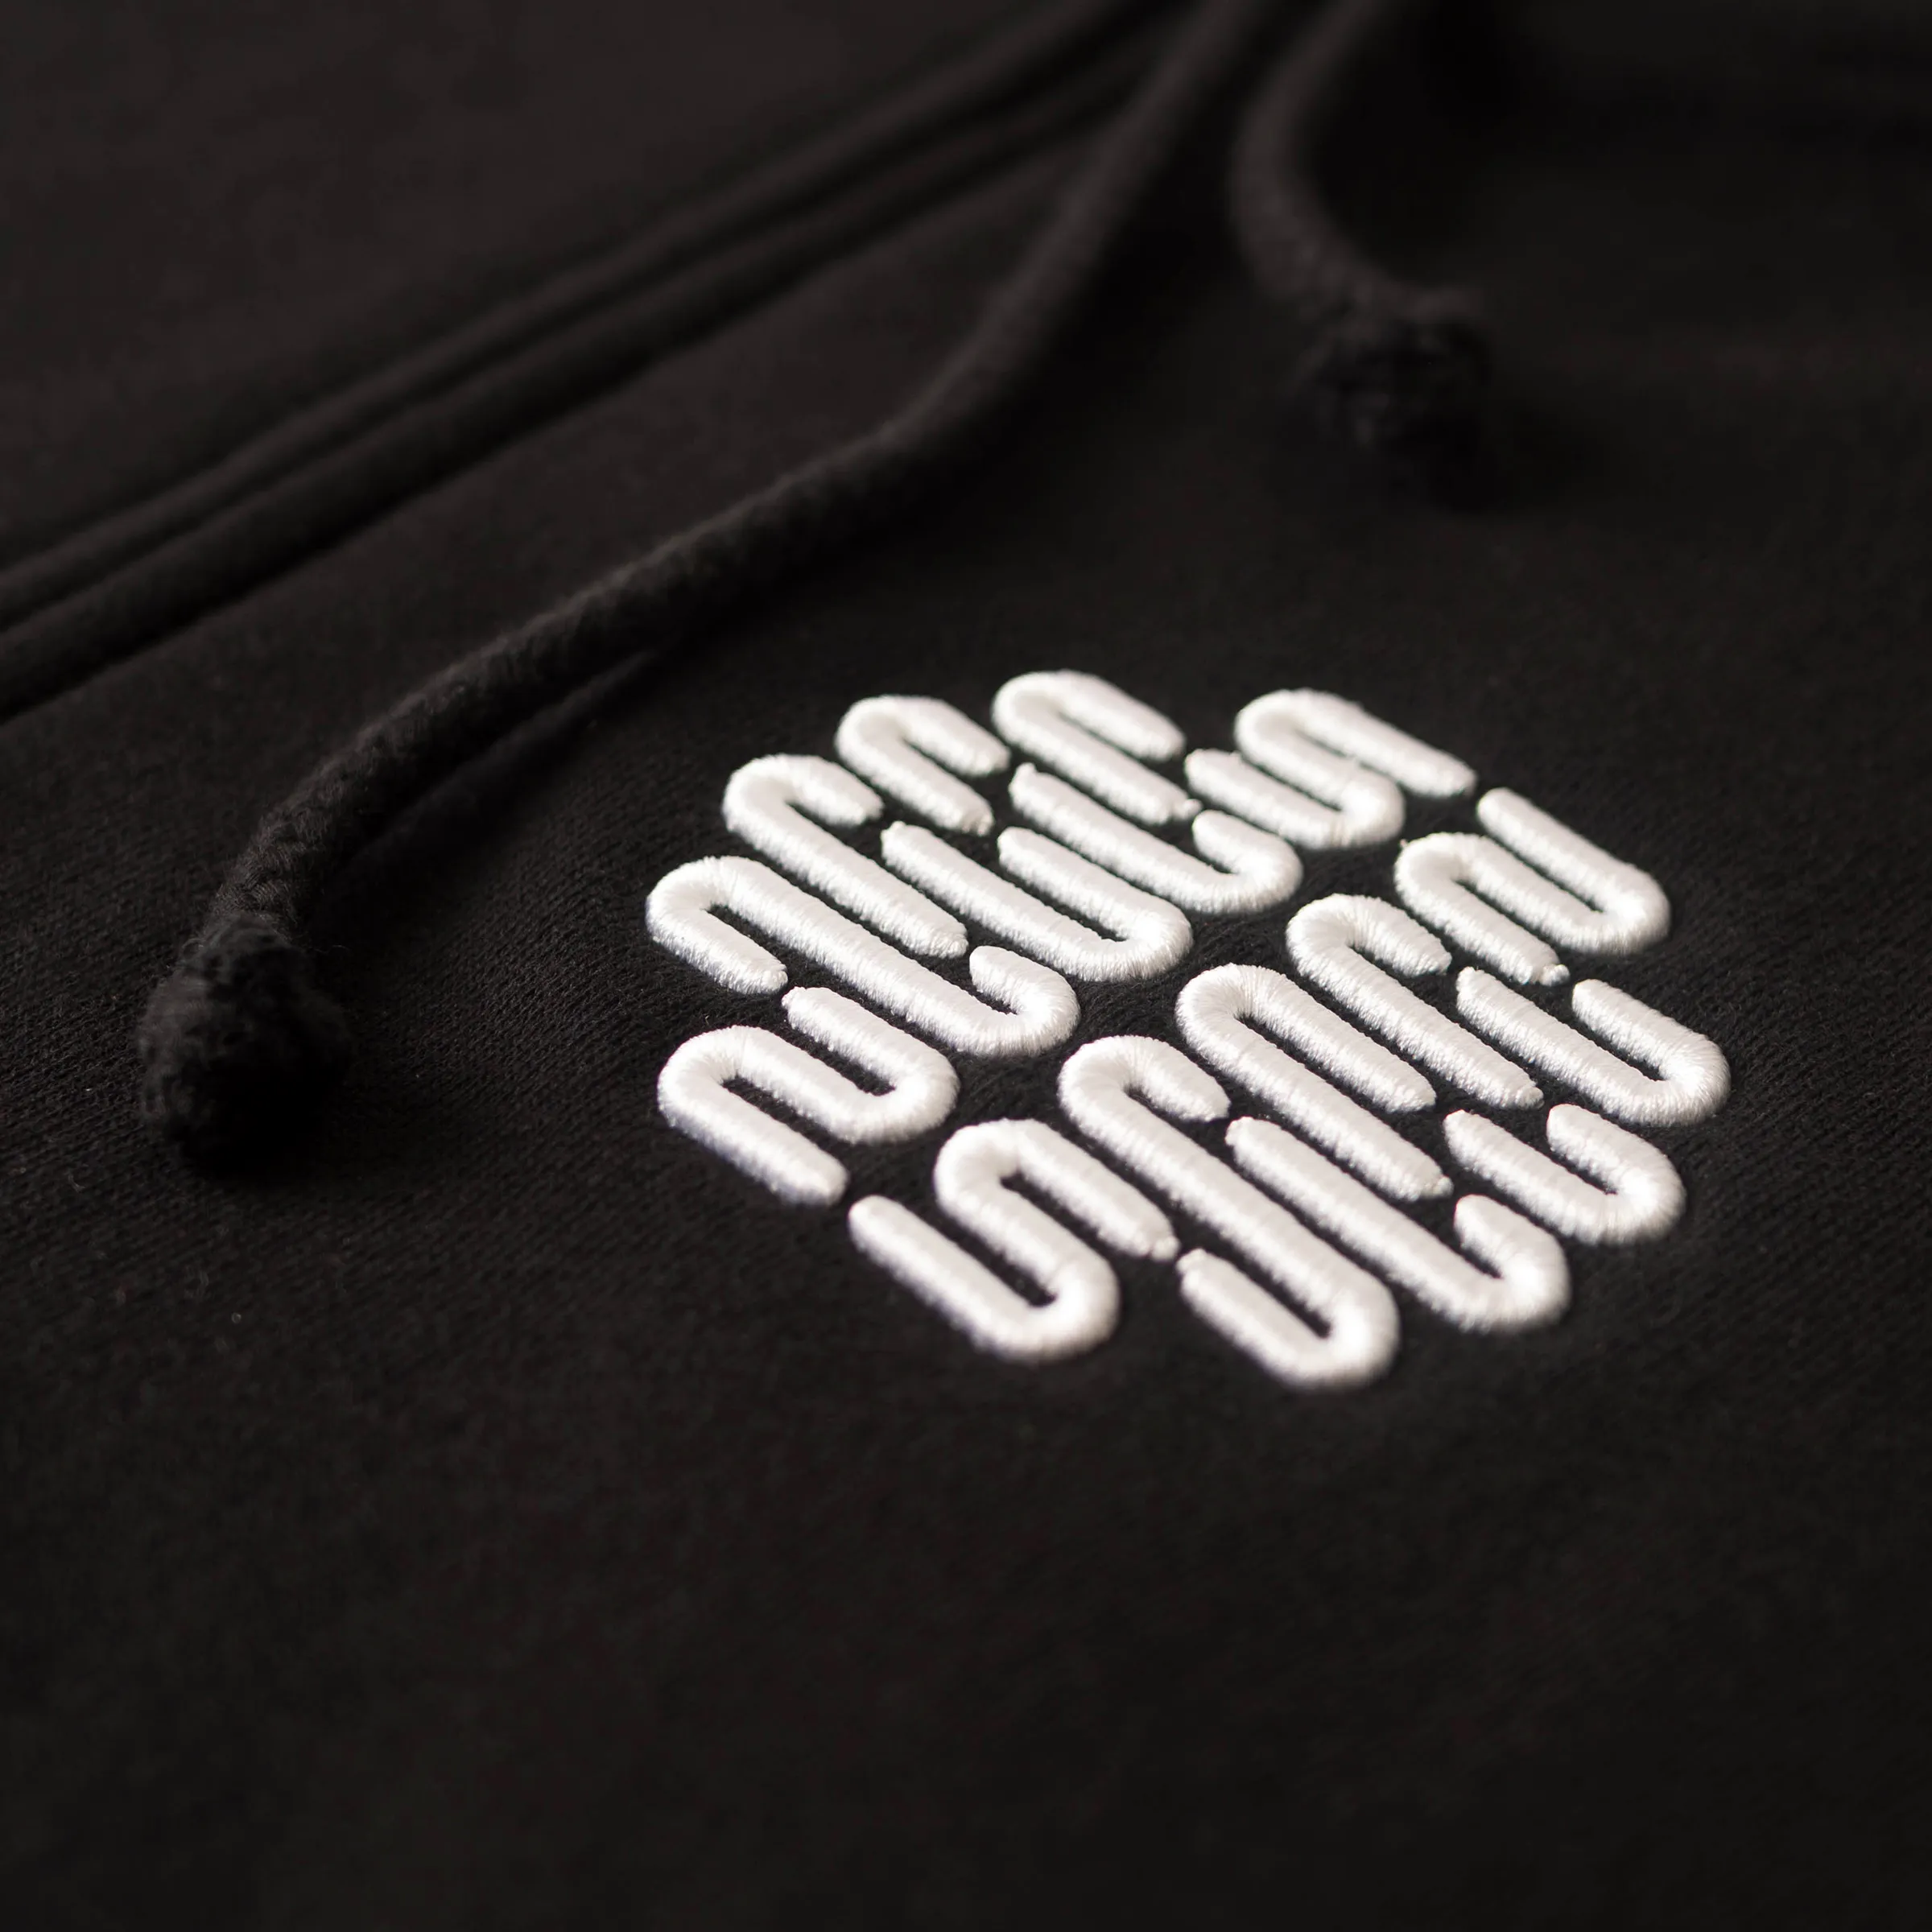 The Original Hoodie” graphic zip-up hoodie by Cortex Podcast